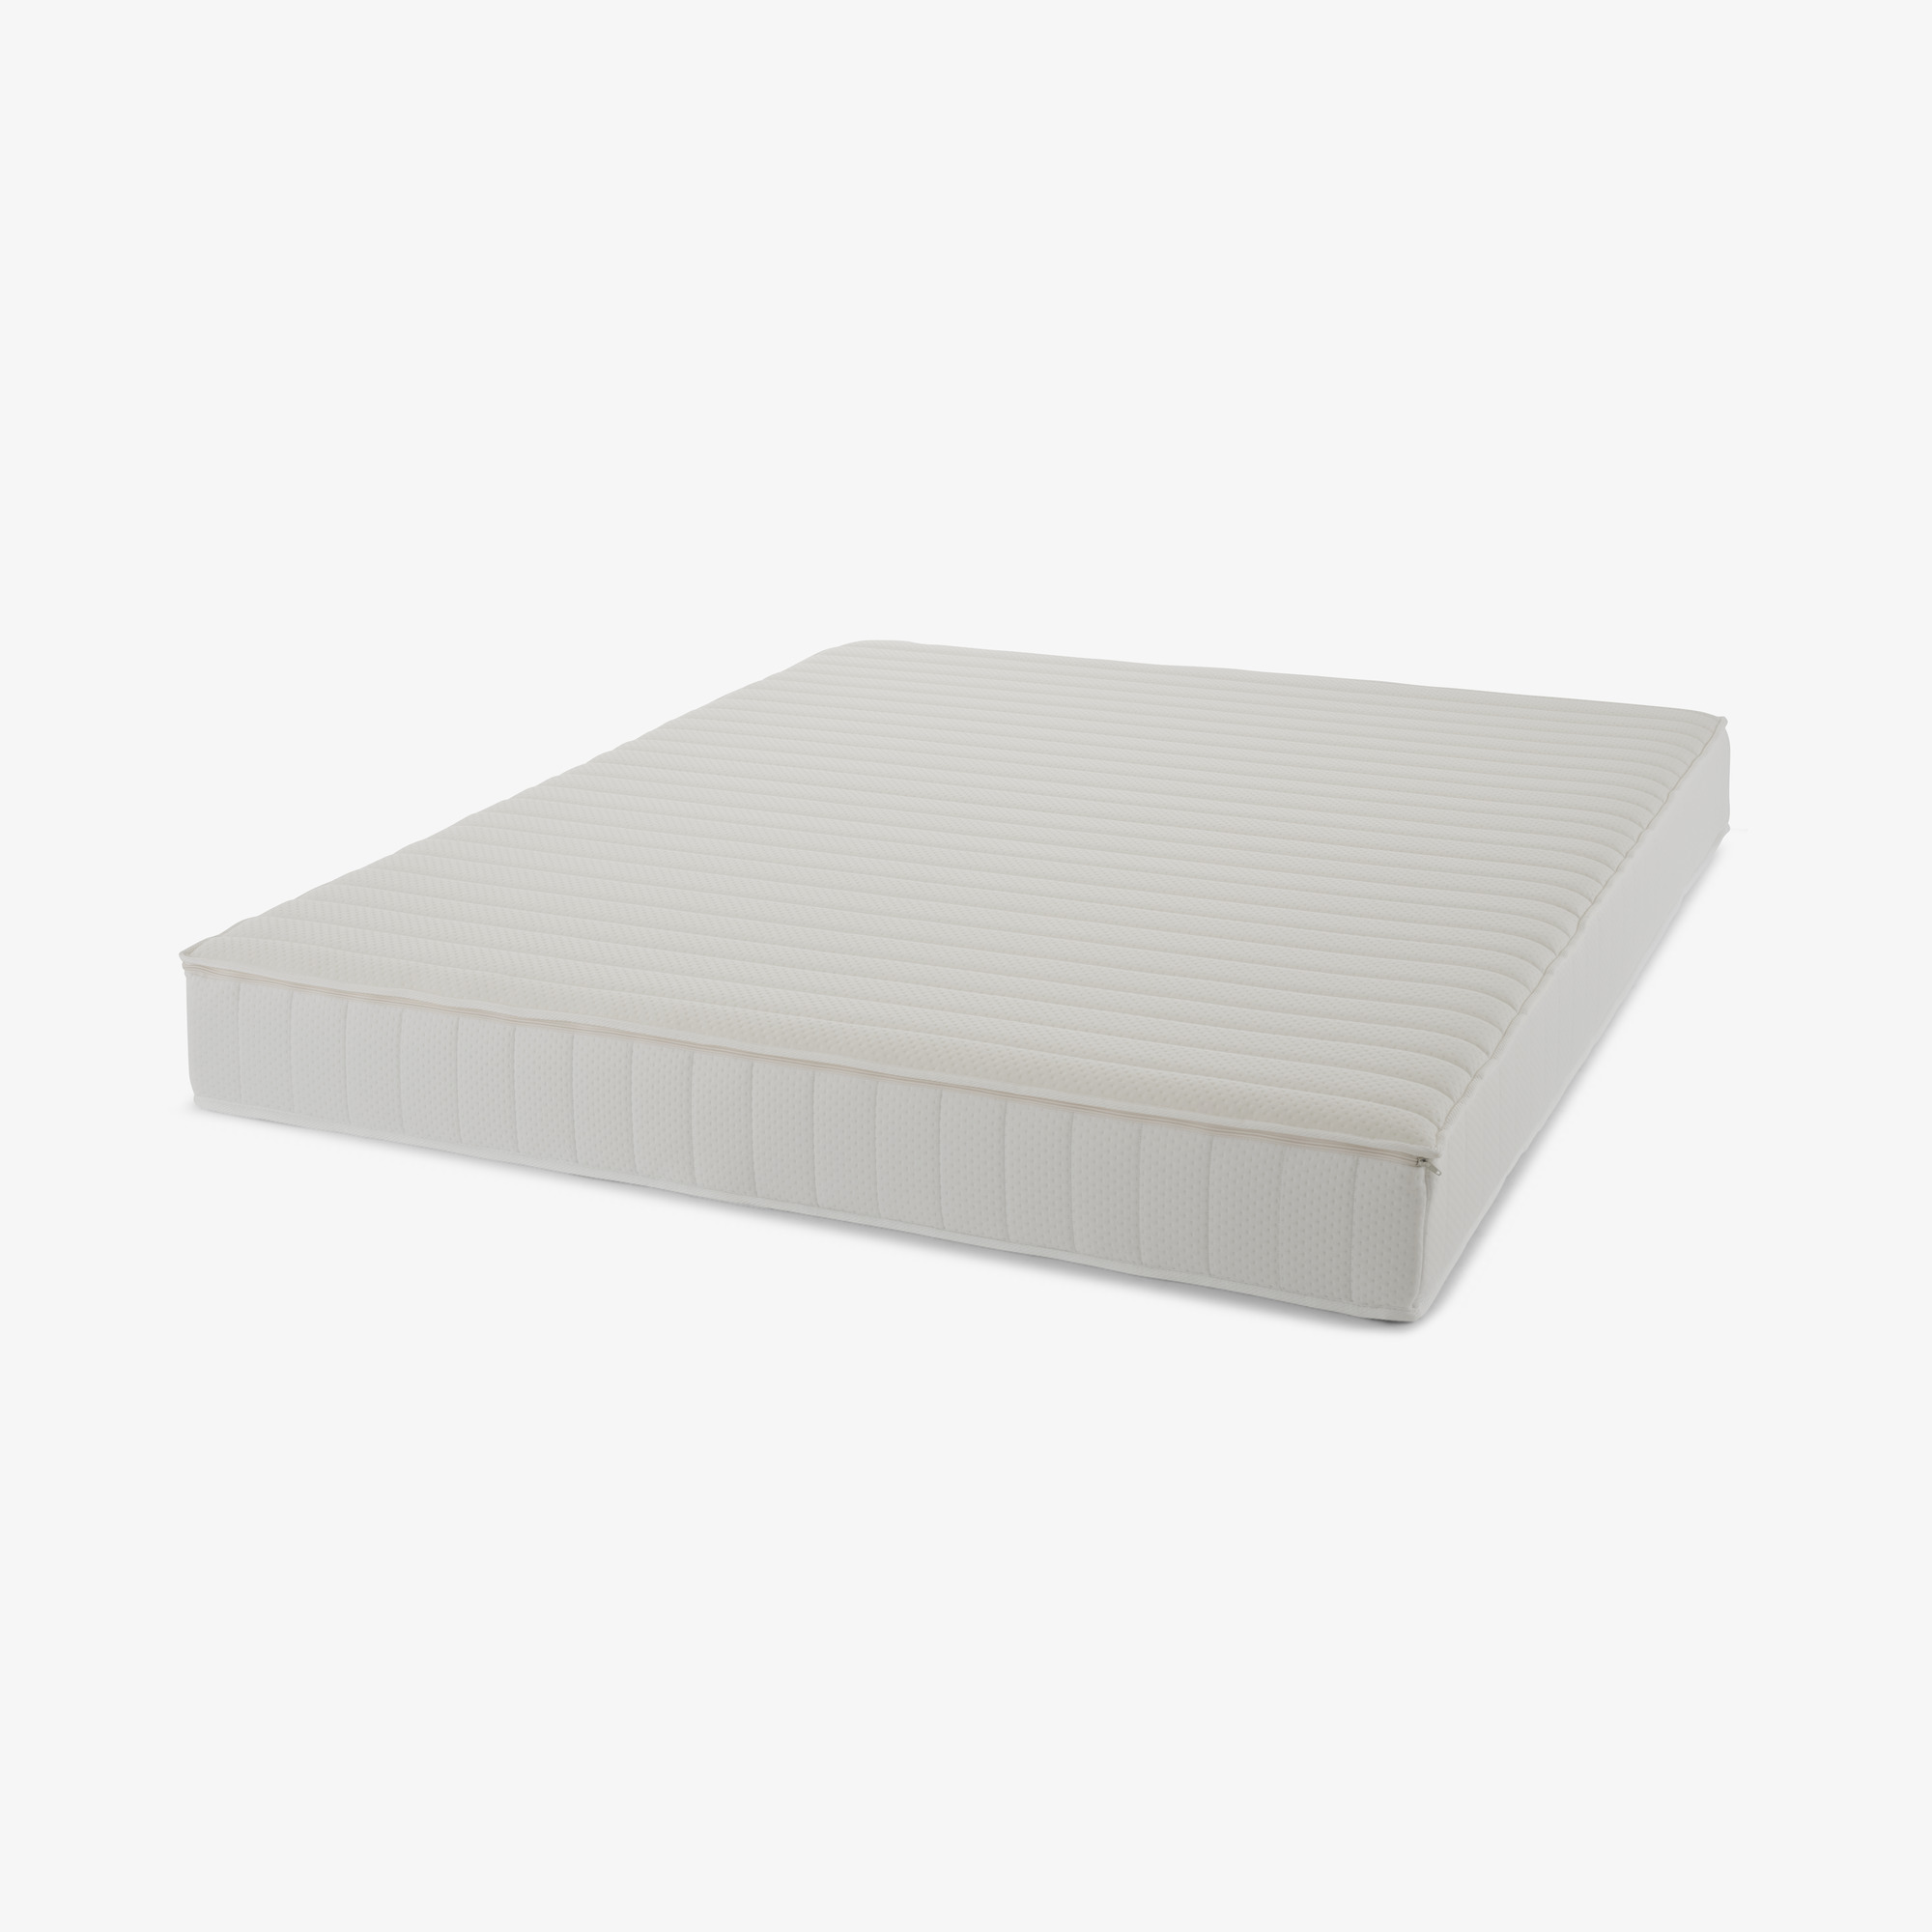 Image Bultex + viscoelastic foam (sensus) mattresses 2